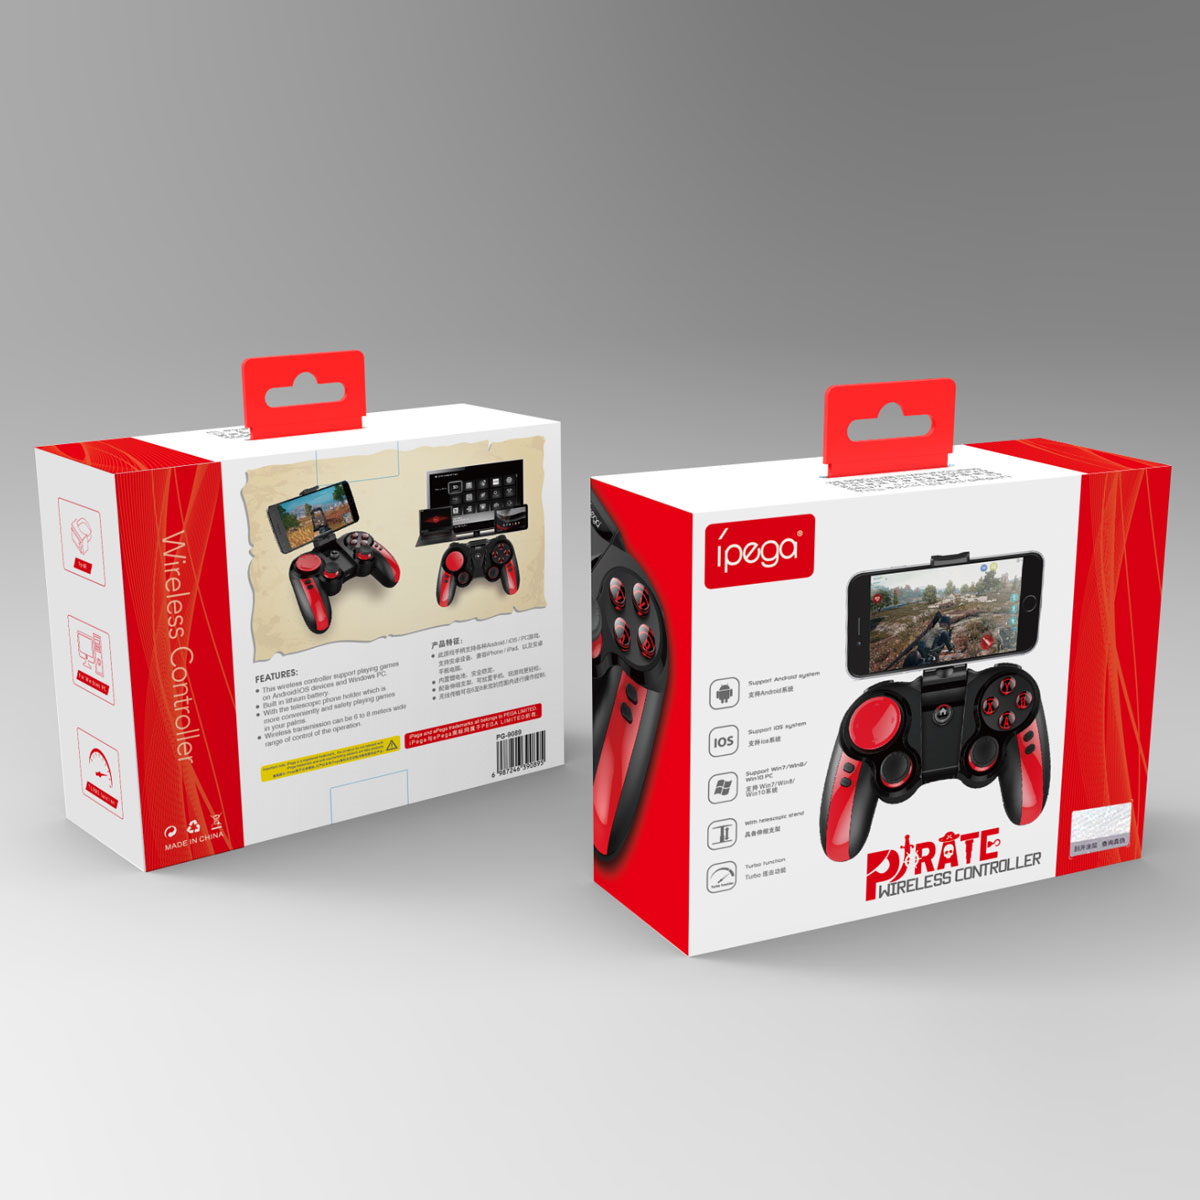 Ipega 9089 professional Bluetooth gamepad Joystick-Game Controller-Ten brands of Bluetooth gamepad